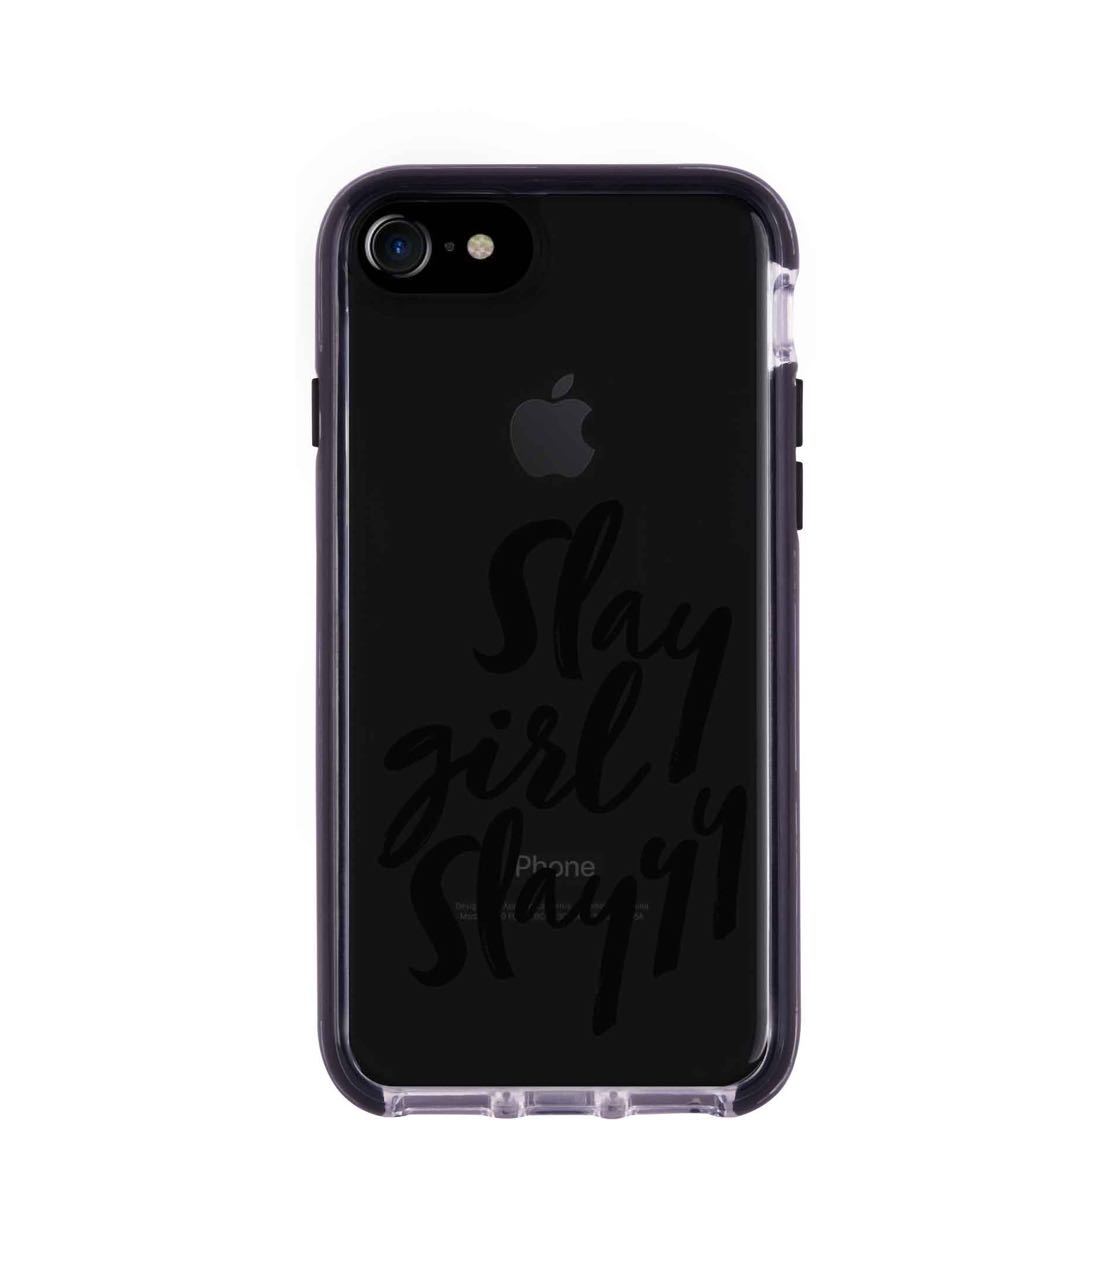 Slay girl Slay - Extreme Phone Case for iPhone 7